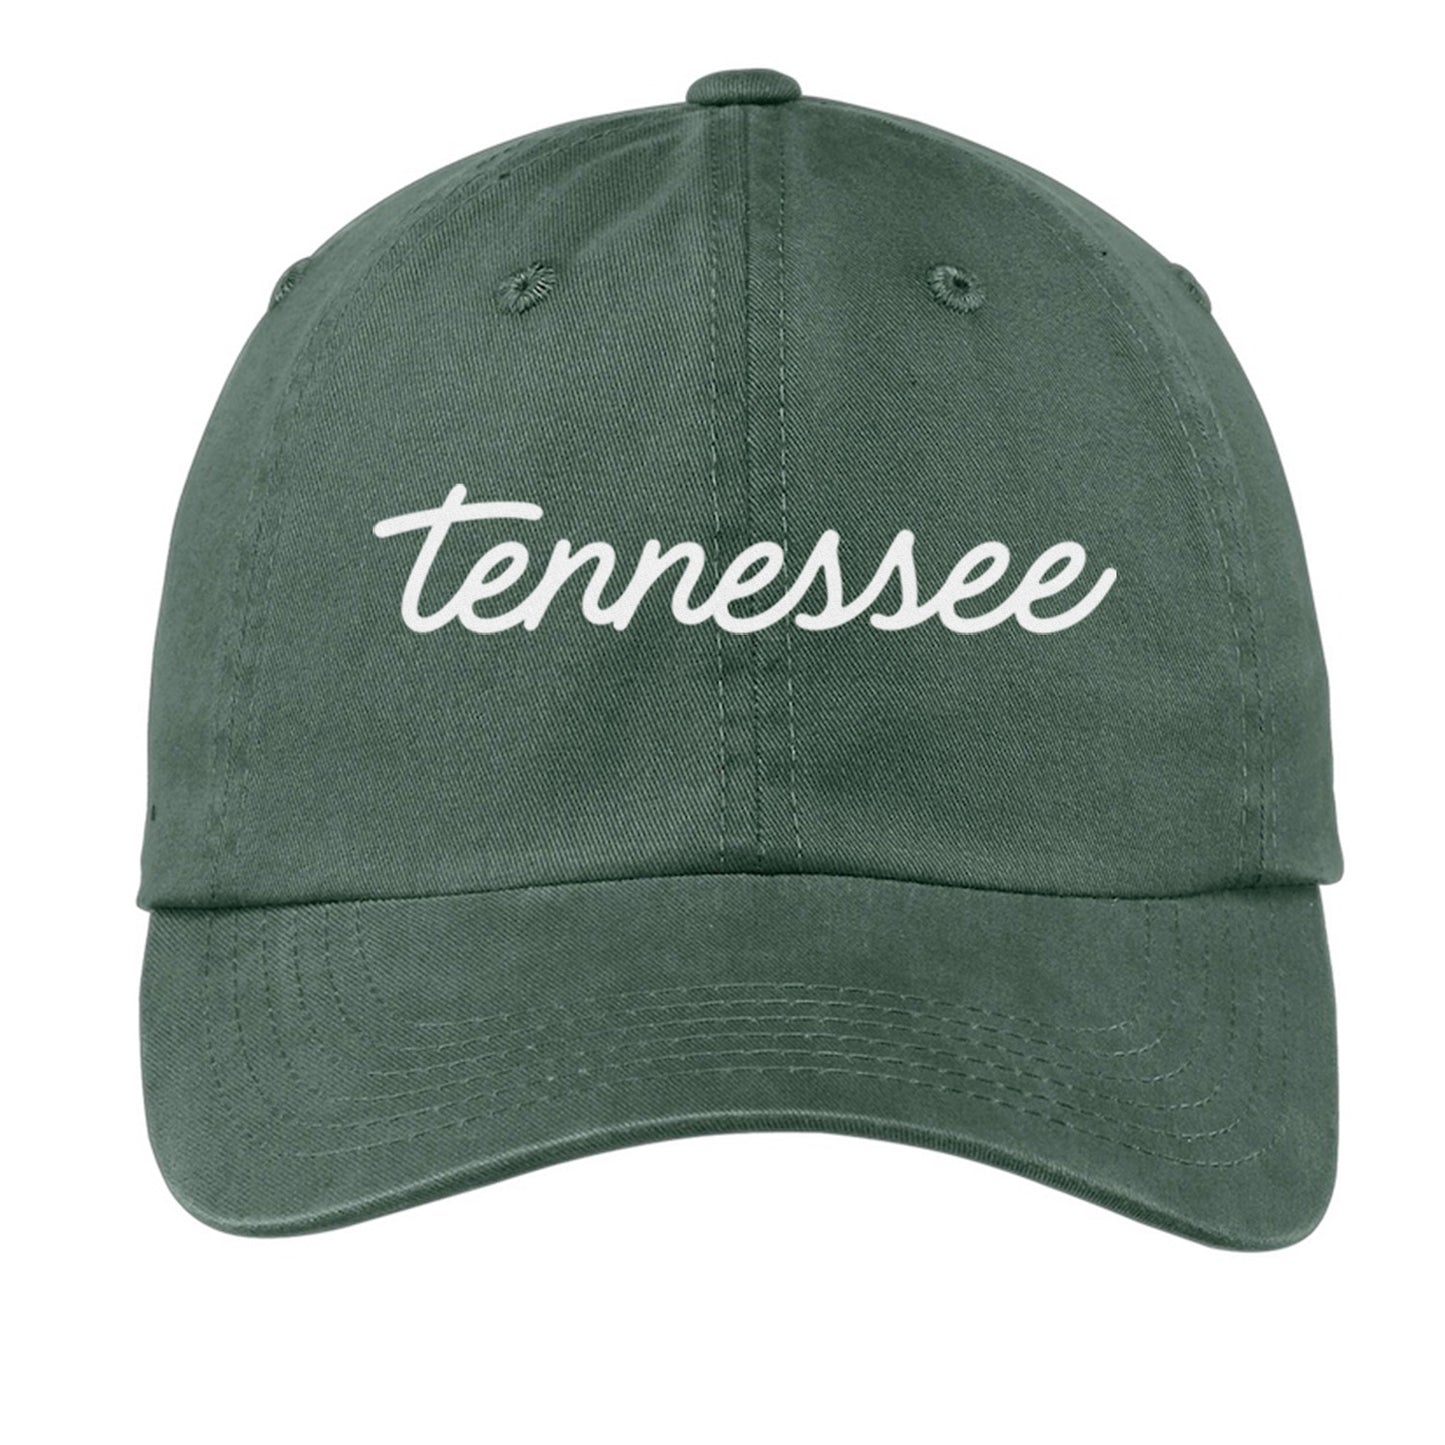 Tennessee Cursive Baseball Cap